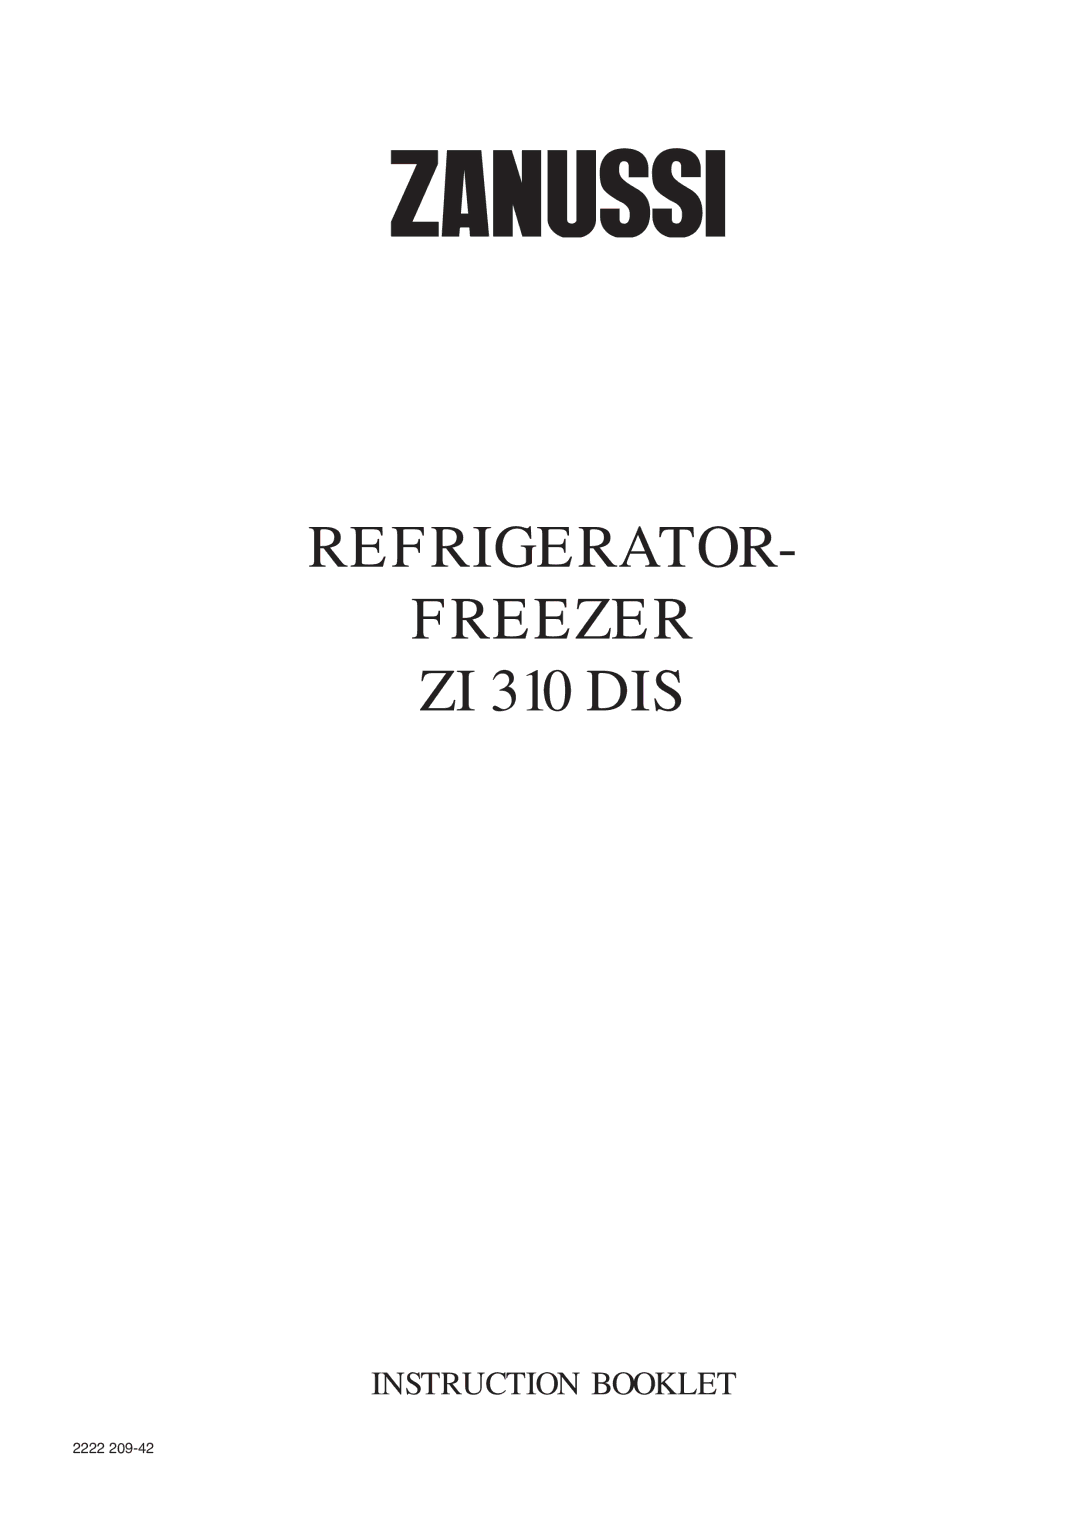 Zanussi ZI 310 DIS manual Refrigerator Freezer 